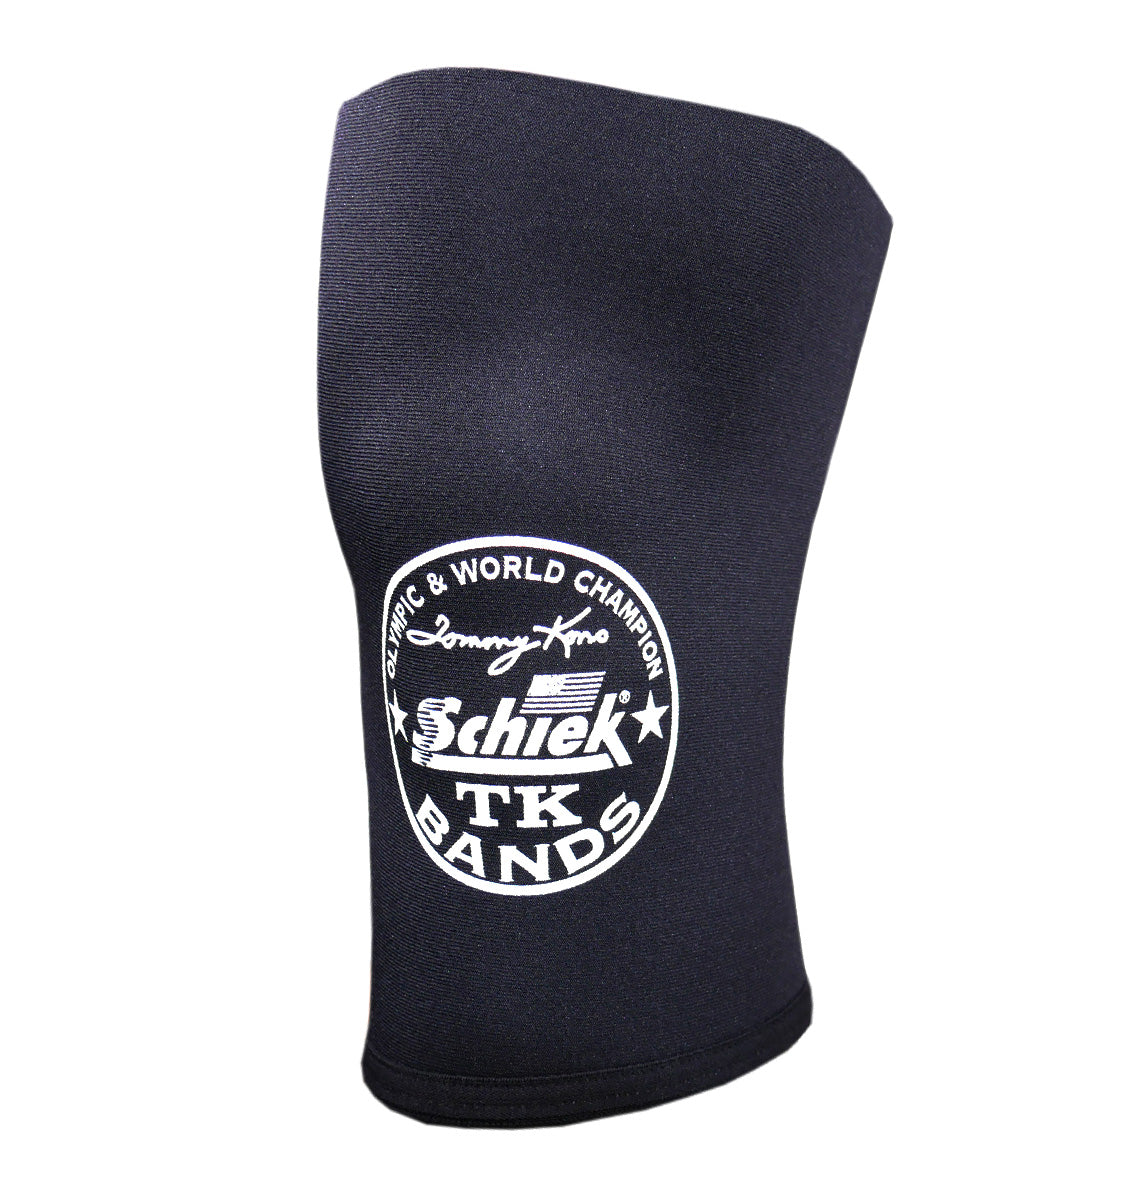 Schiek Tommy Kono Power Knee Sleeves - 1/4" - Black